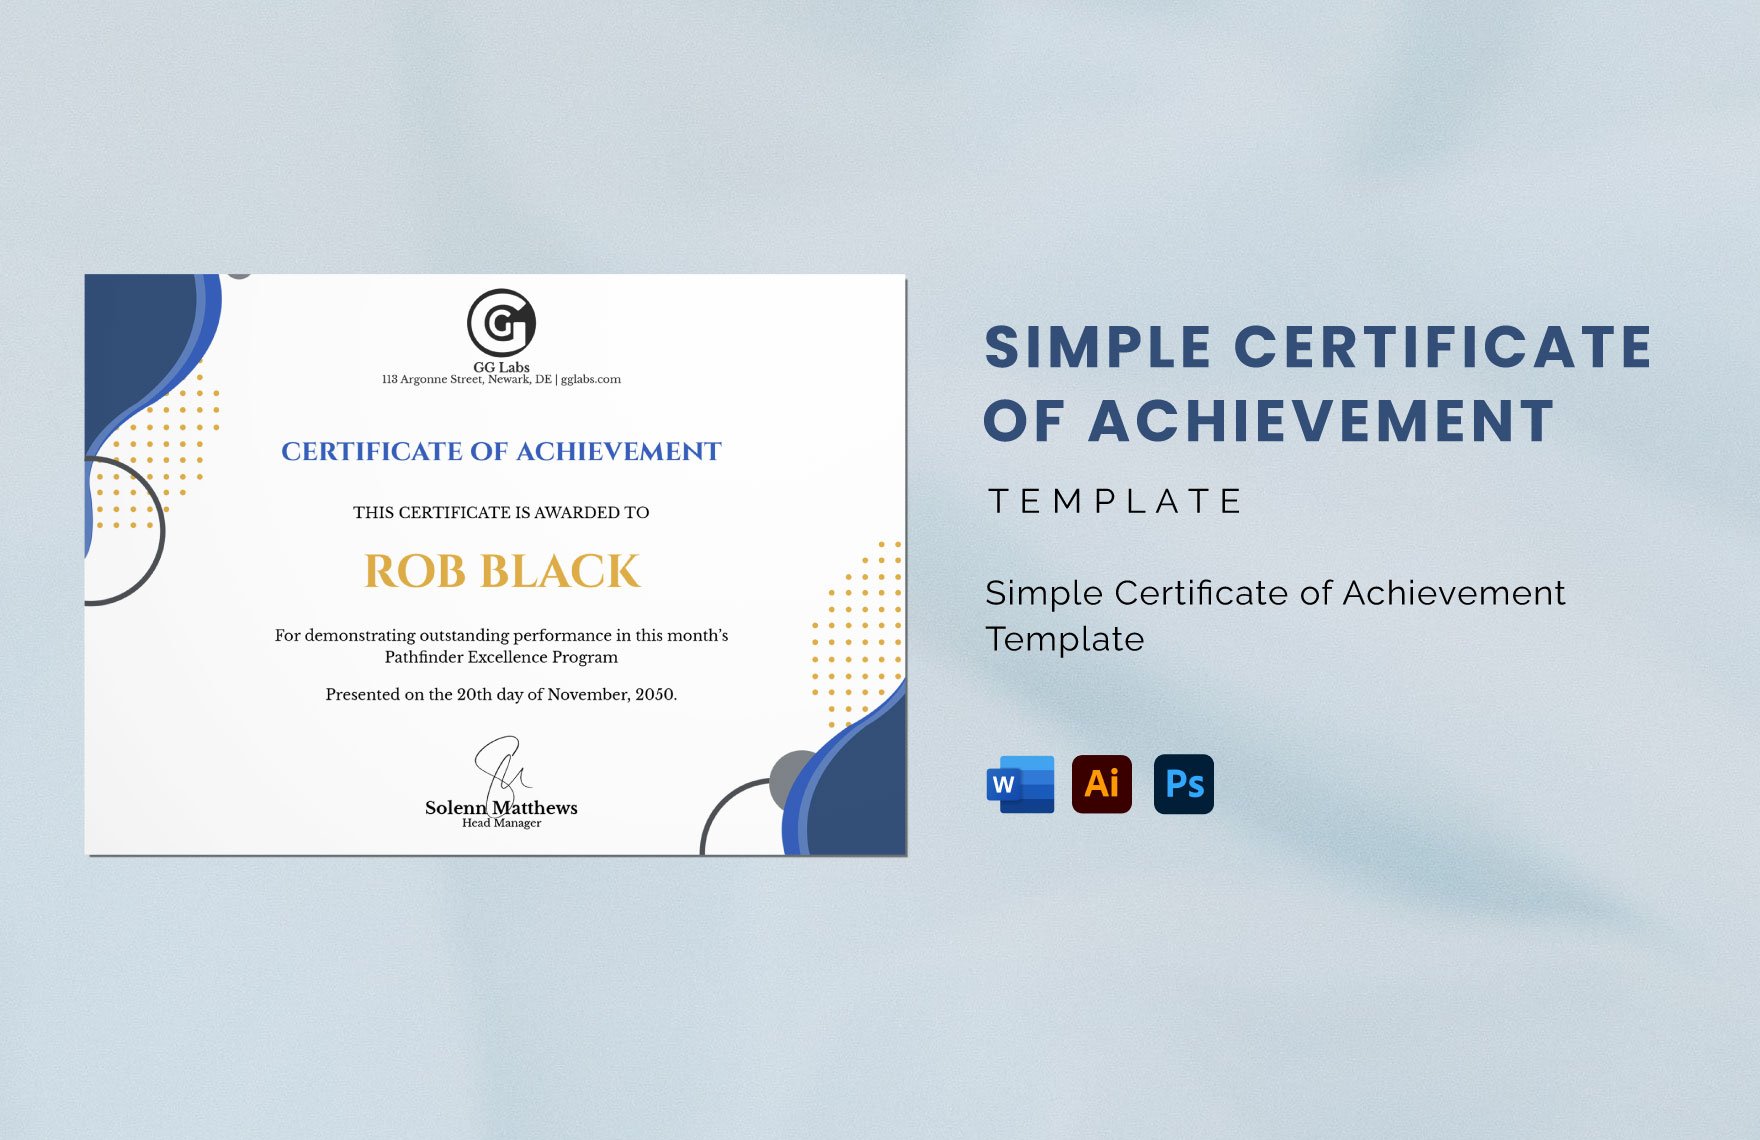 Simple Certificate of Achievement Template